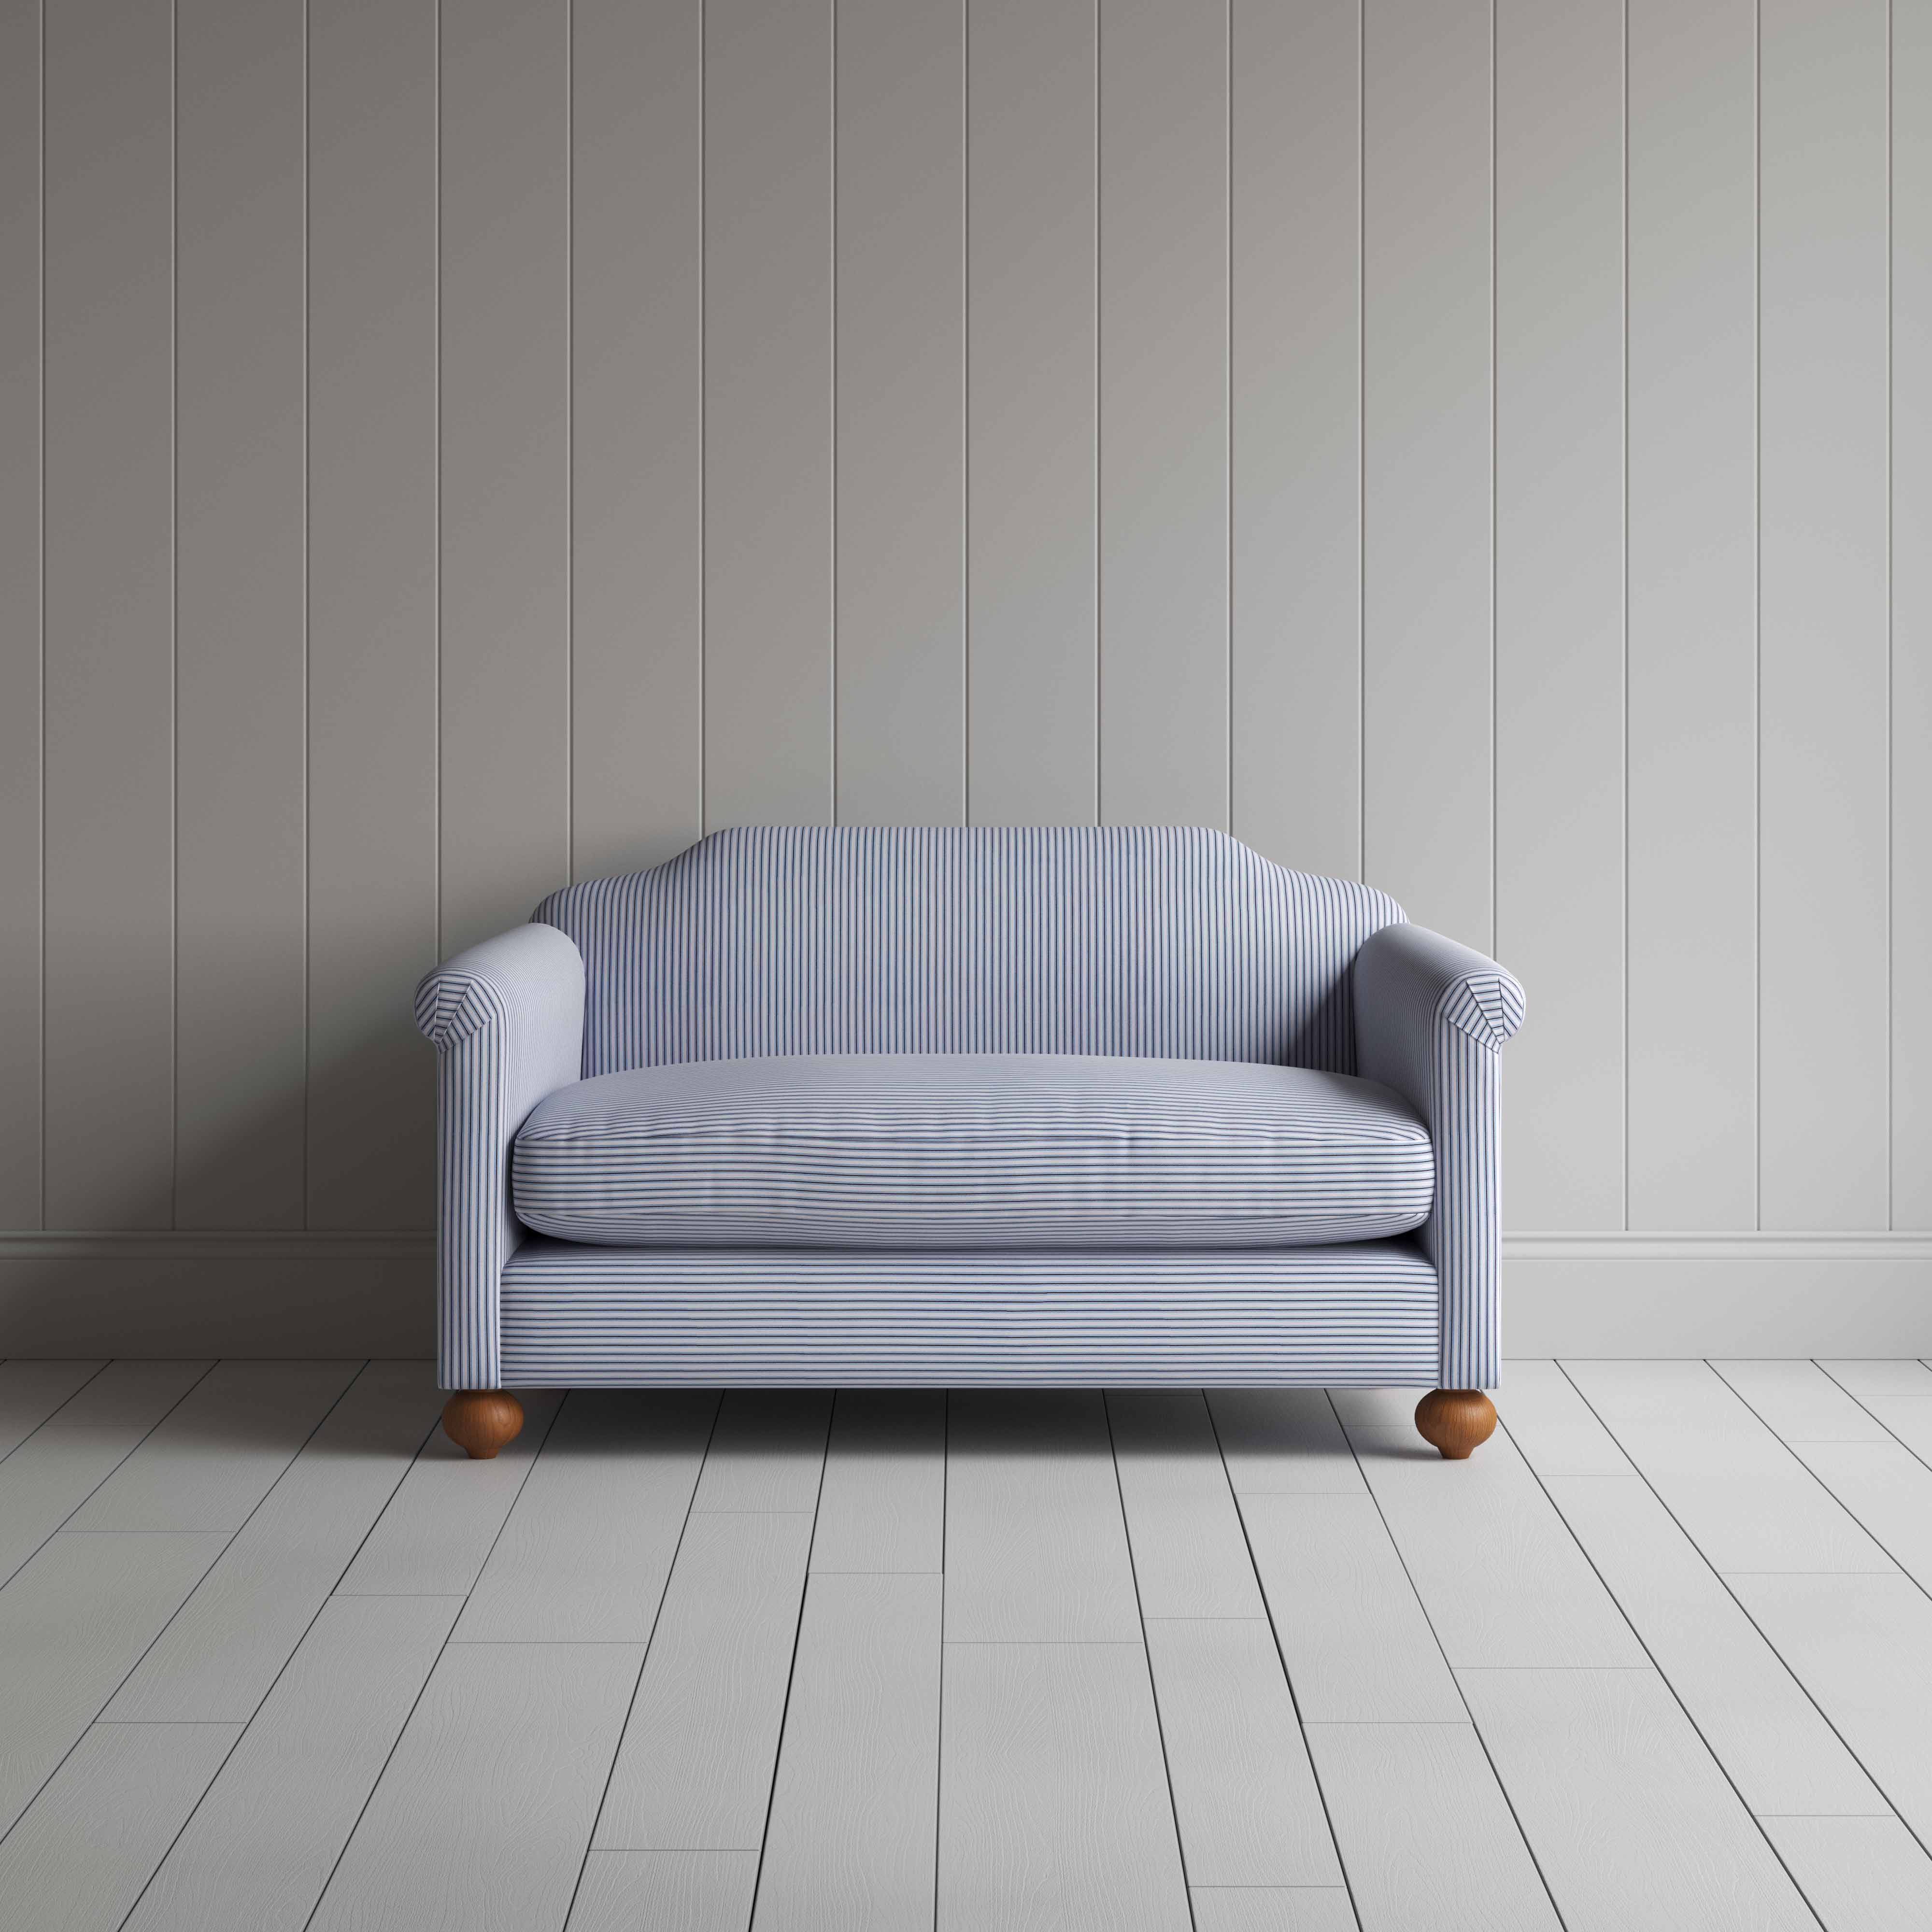  Dolittle 2 Seater Sofa in Ticking Cotton, Aqua Brown 